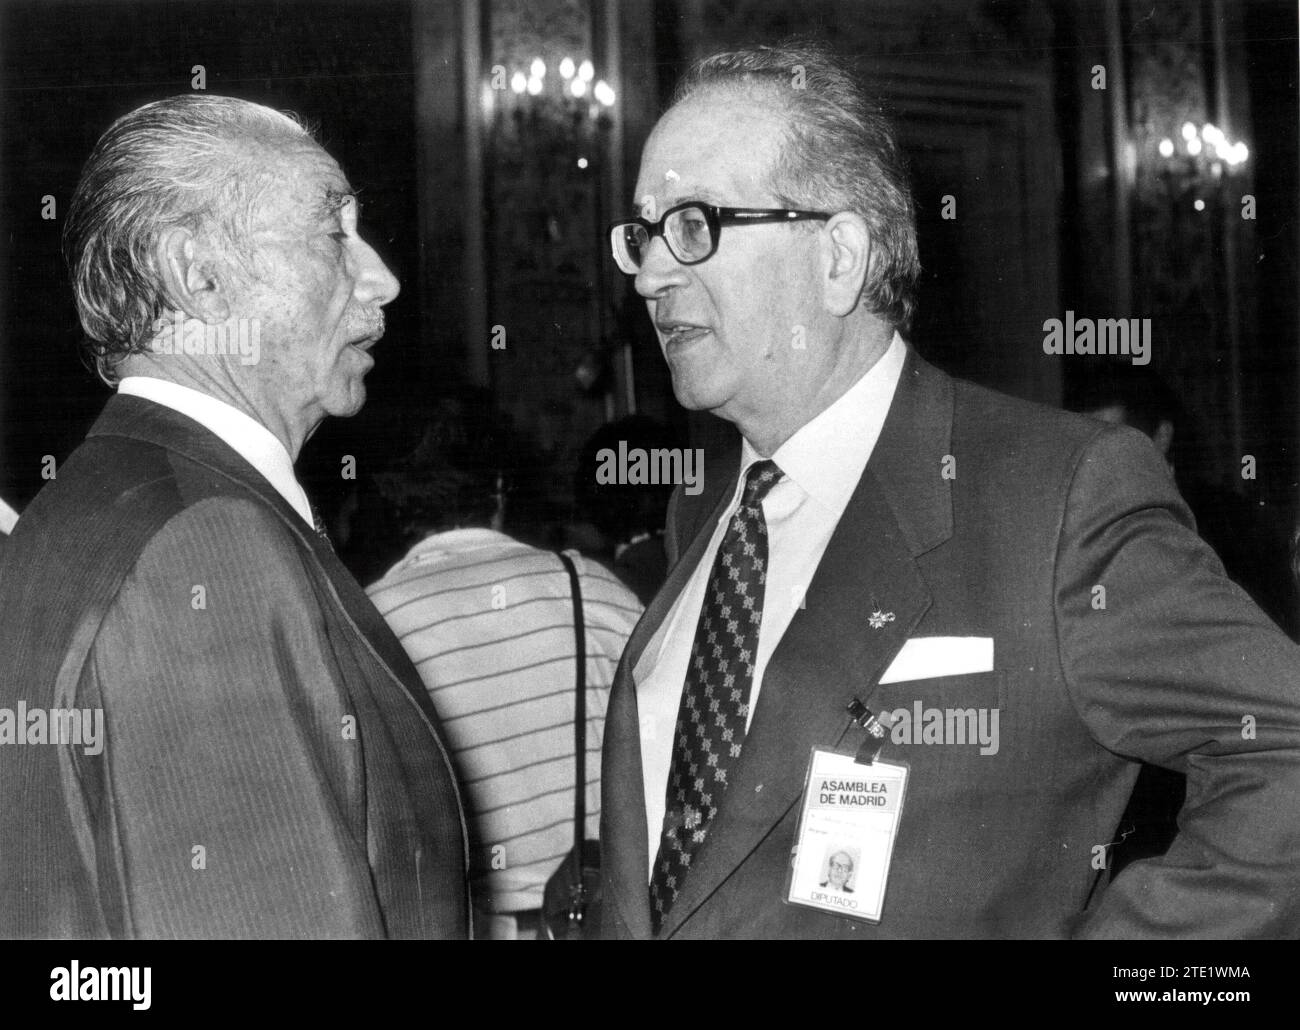 06/07/1983. Robles Piquer talking with Juan de Arespacochaga. Credit: Album / Archivo ABC / Luis Ramírez Stock Photo